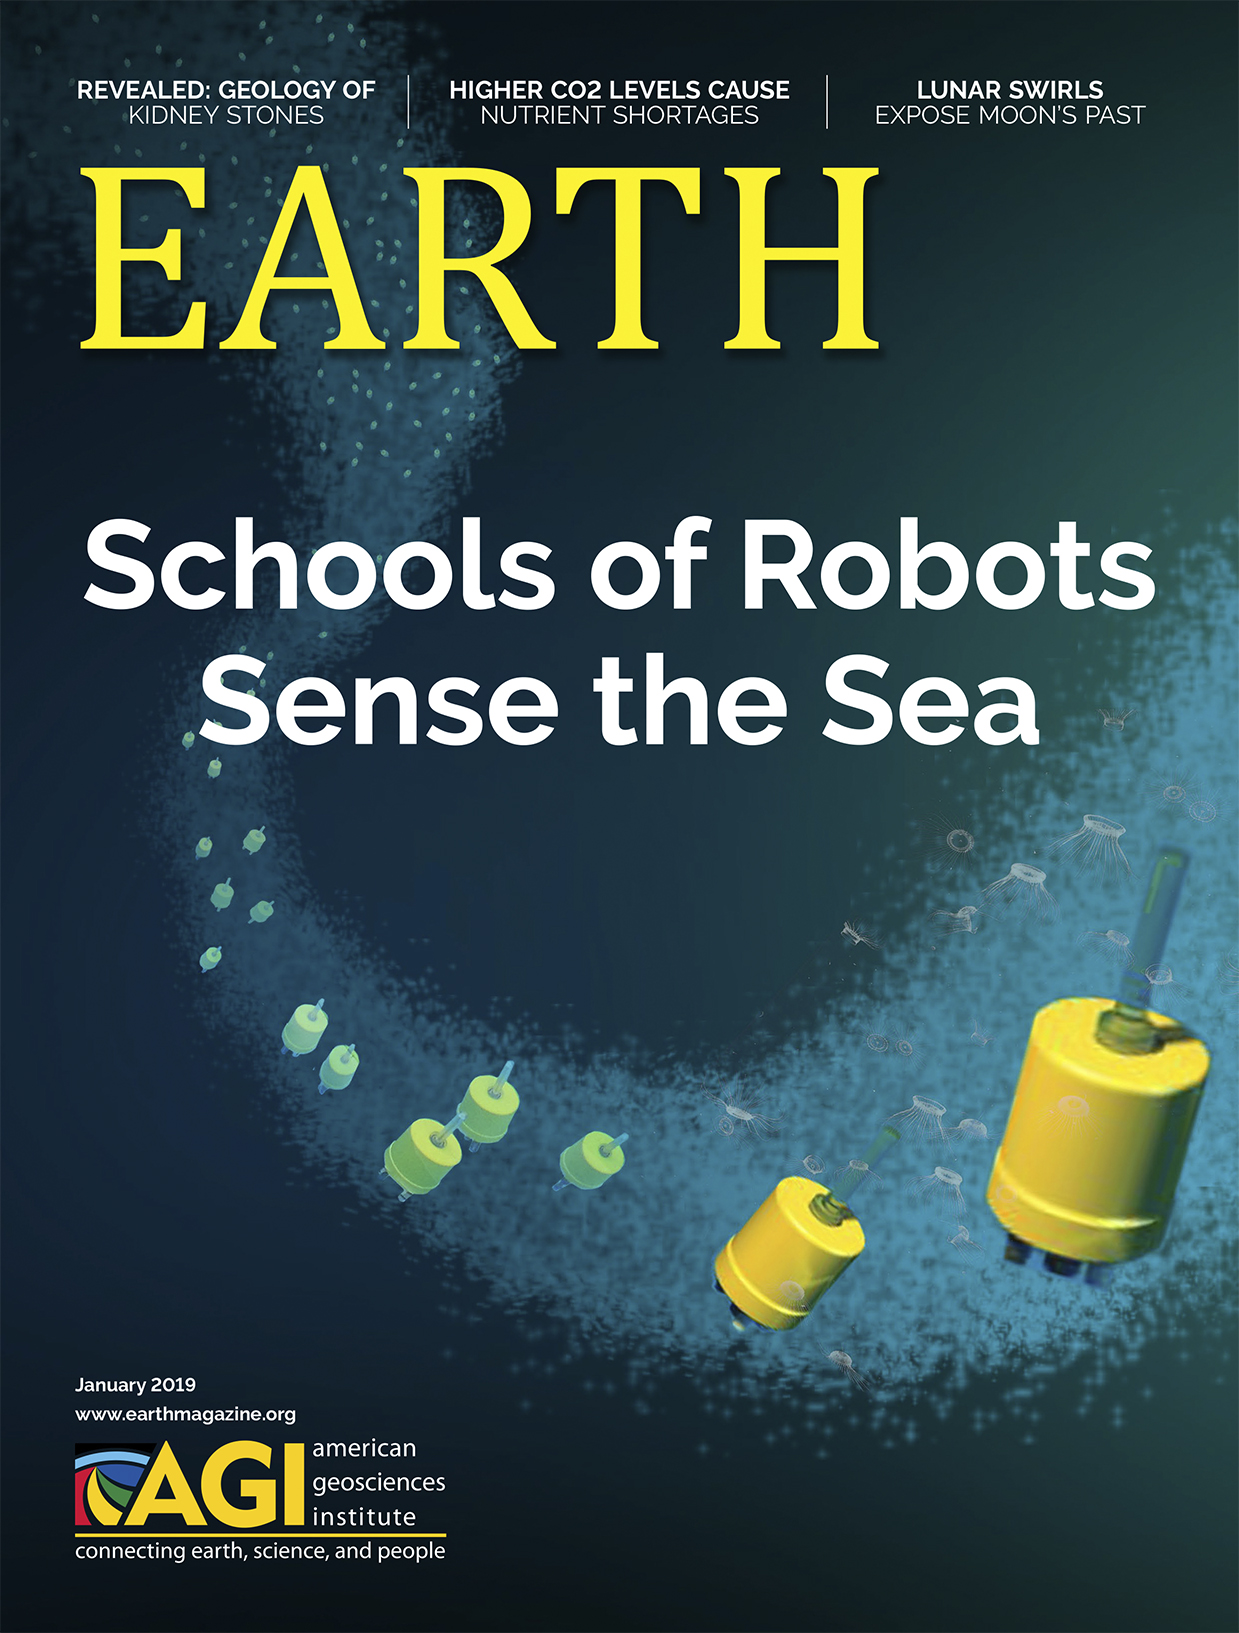  January 2019  EARTH Magazine, layout by Nicole Schmidgall  www.nicoleschmidgall.com  